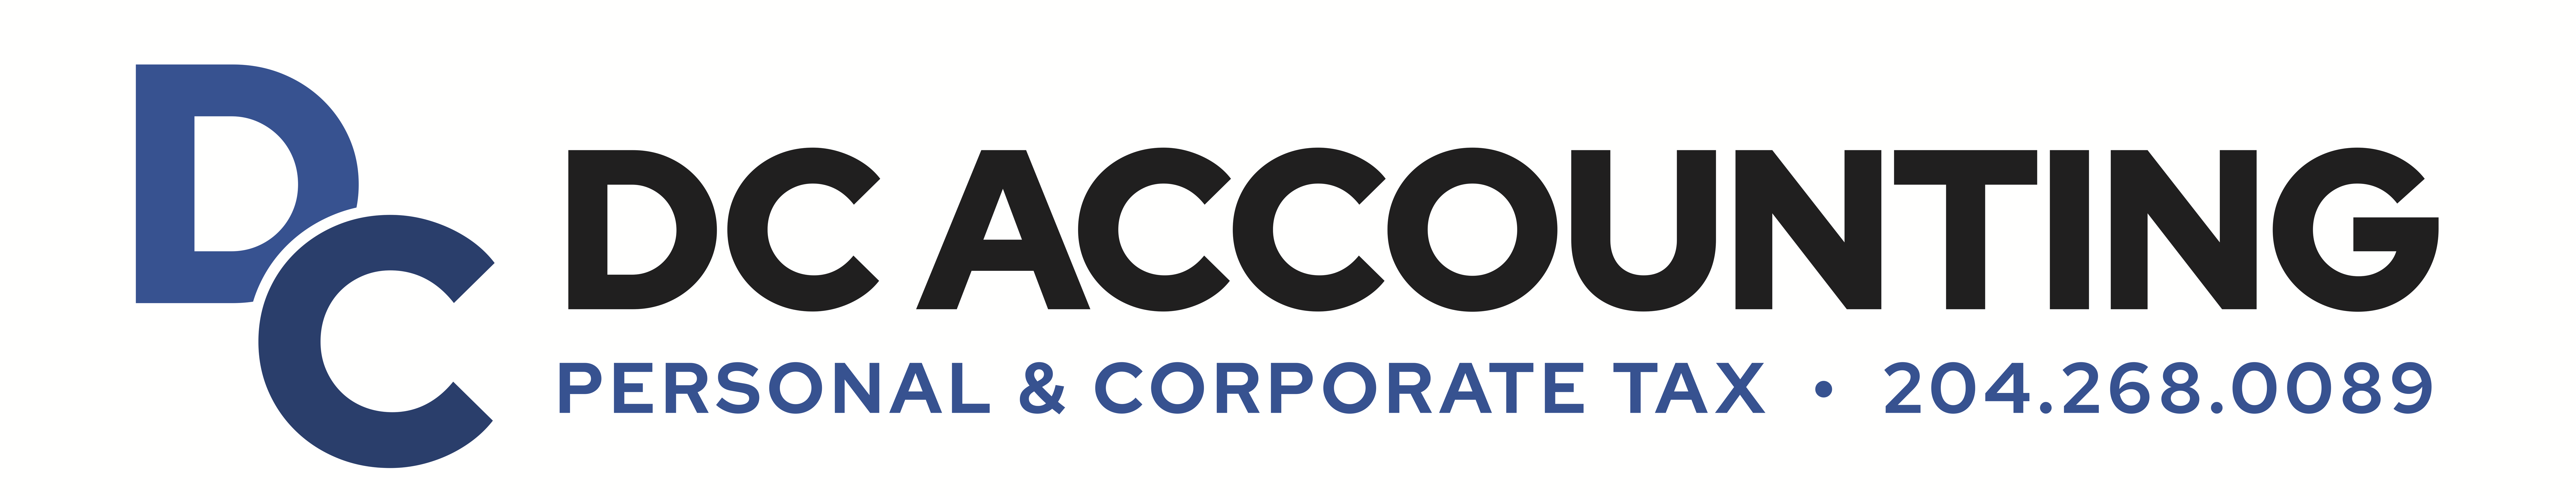 DC Accounting logo